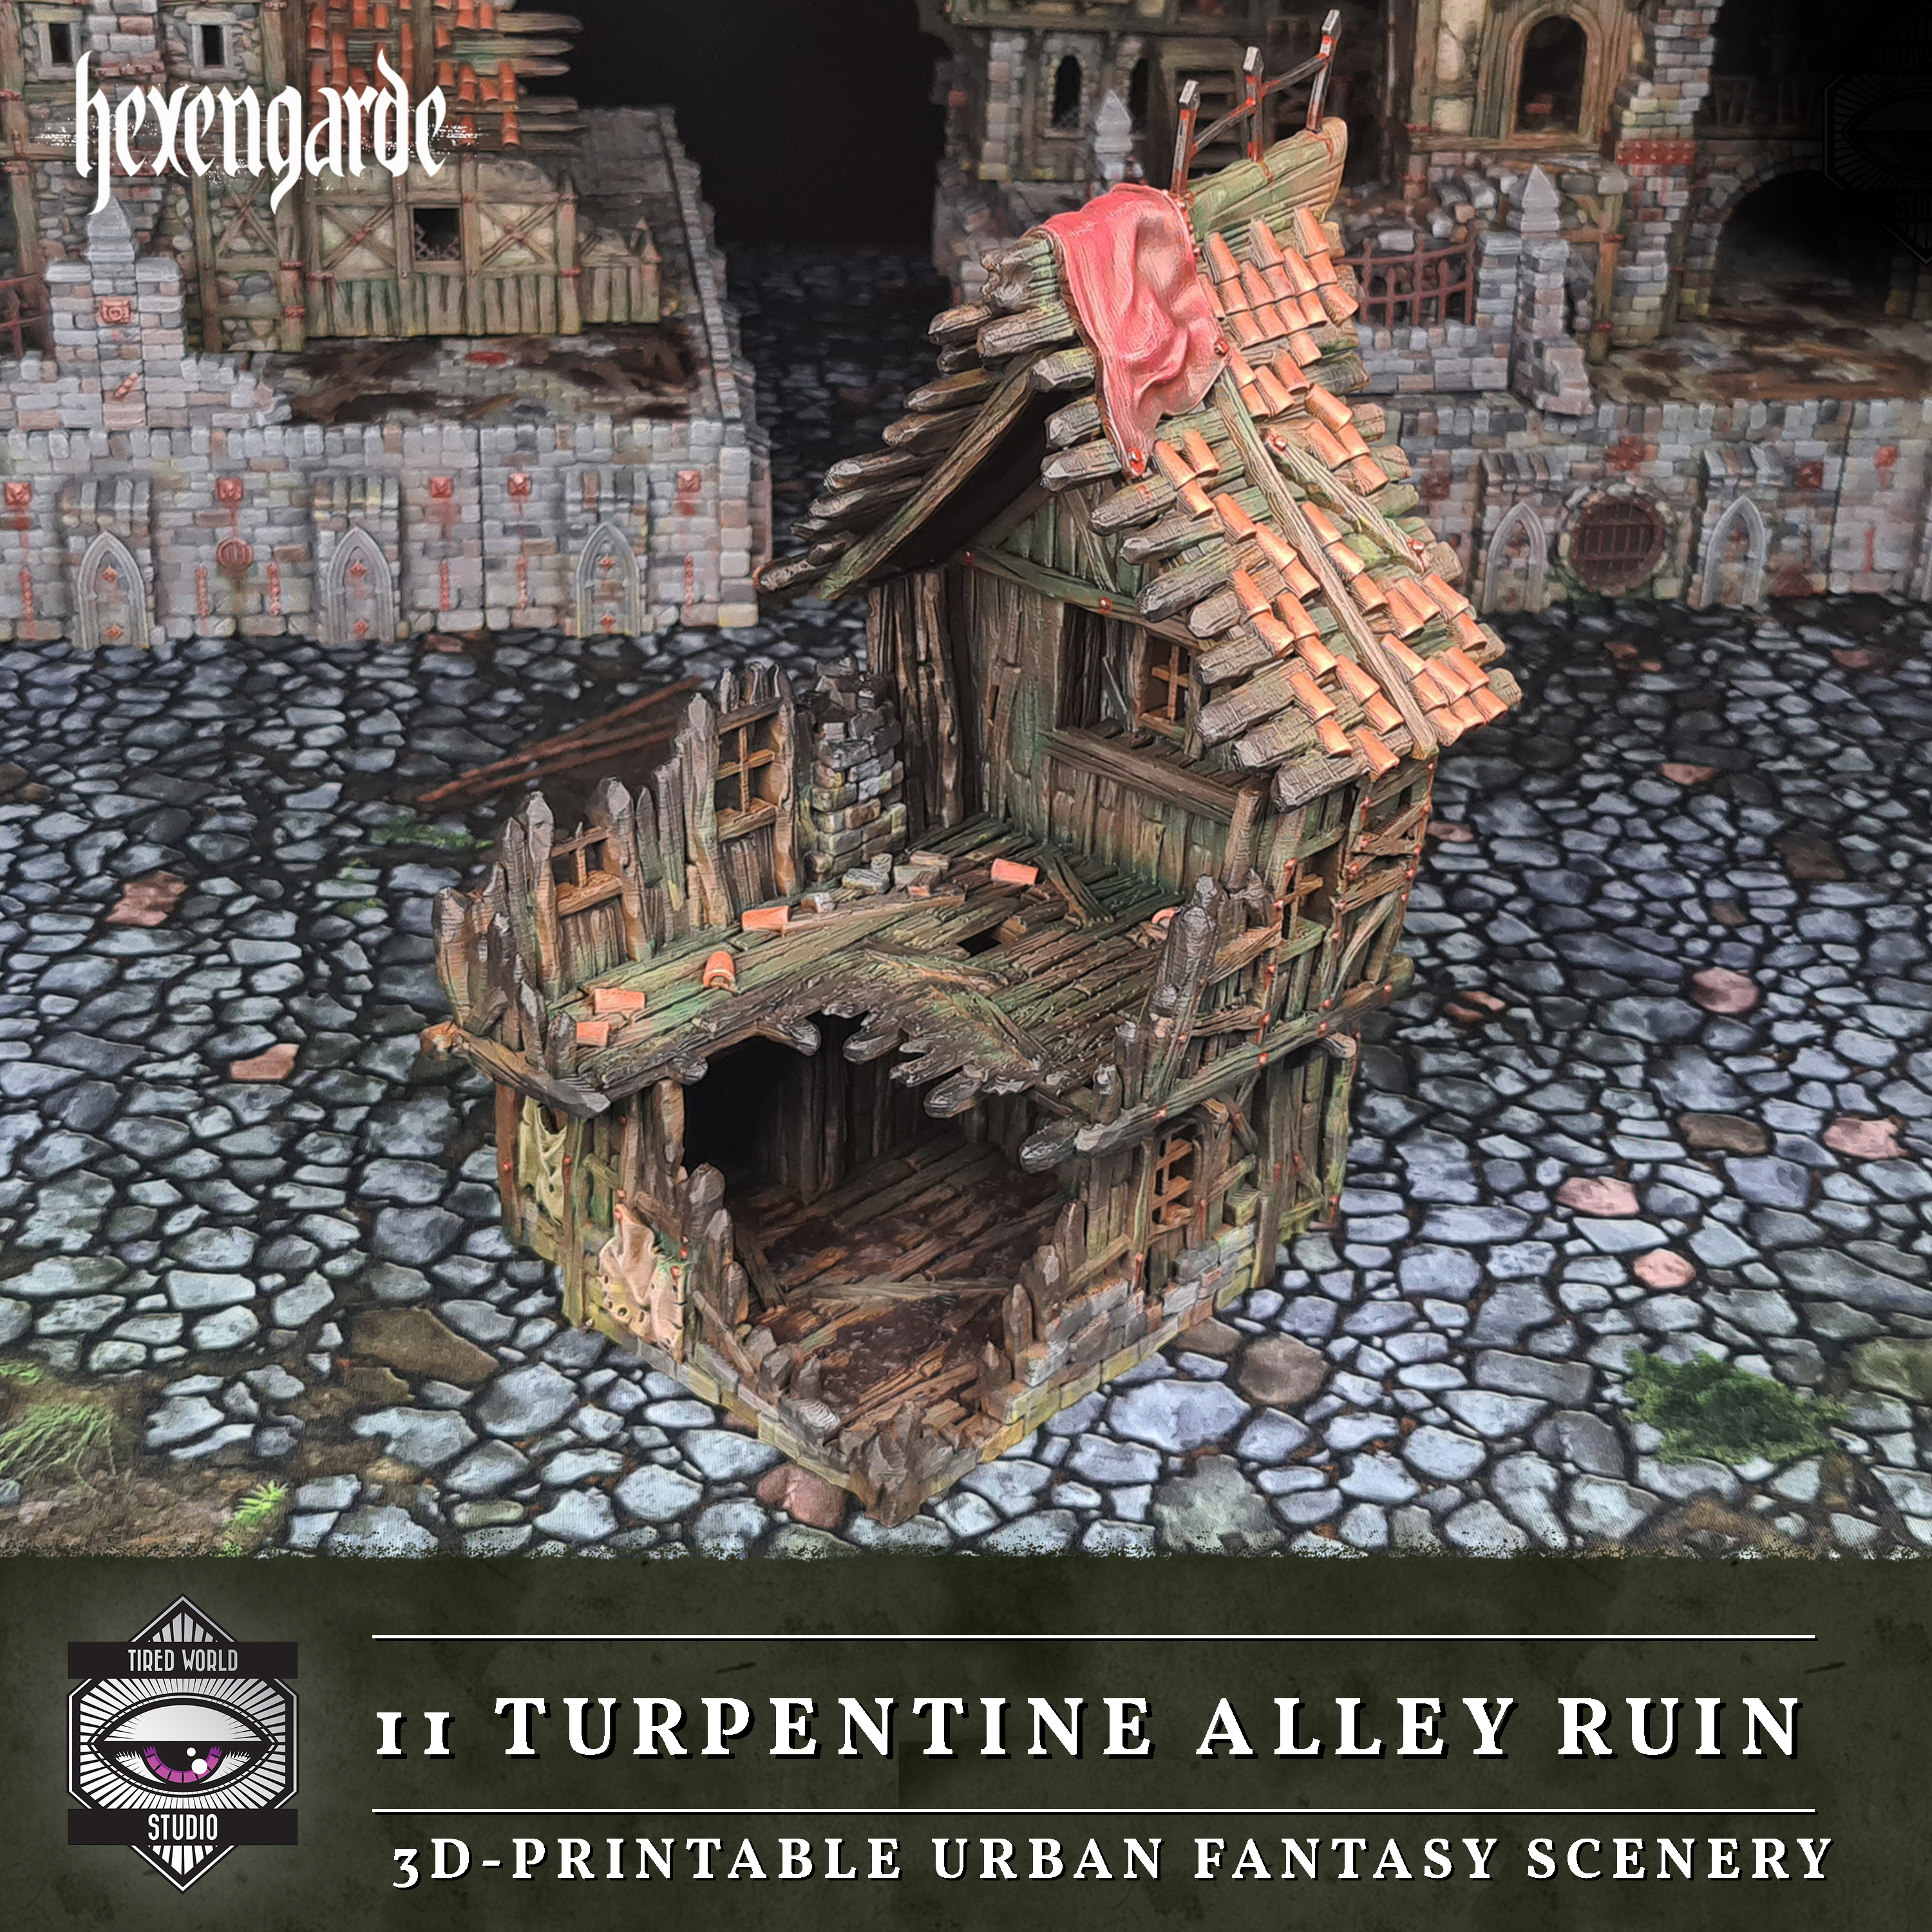 11 Turpentine Alley Ruin